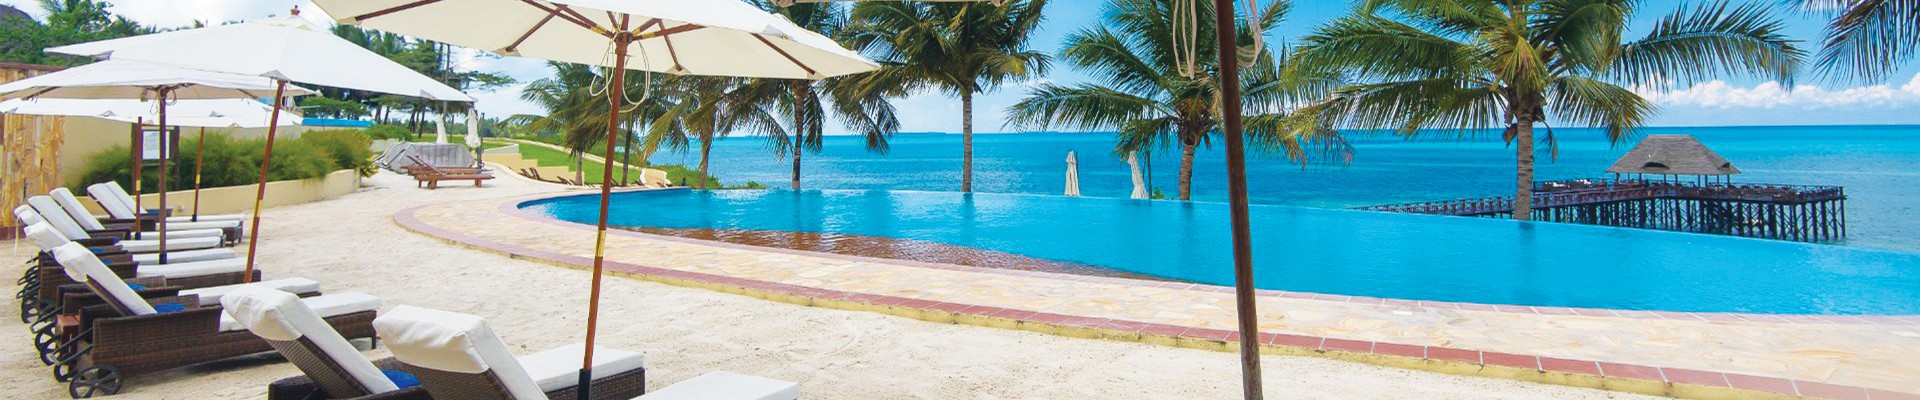 5* Sea Cliff Resort & Spa - Zanzibar Package (5 Nights)